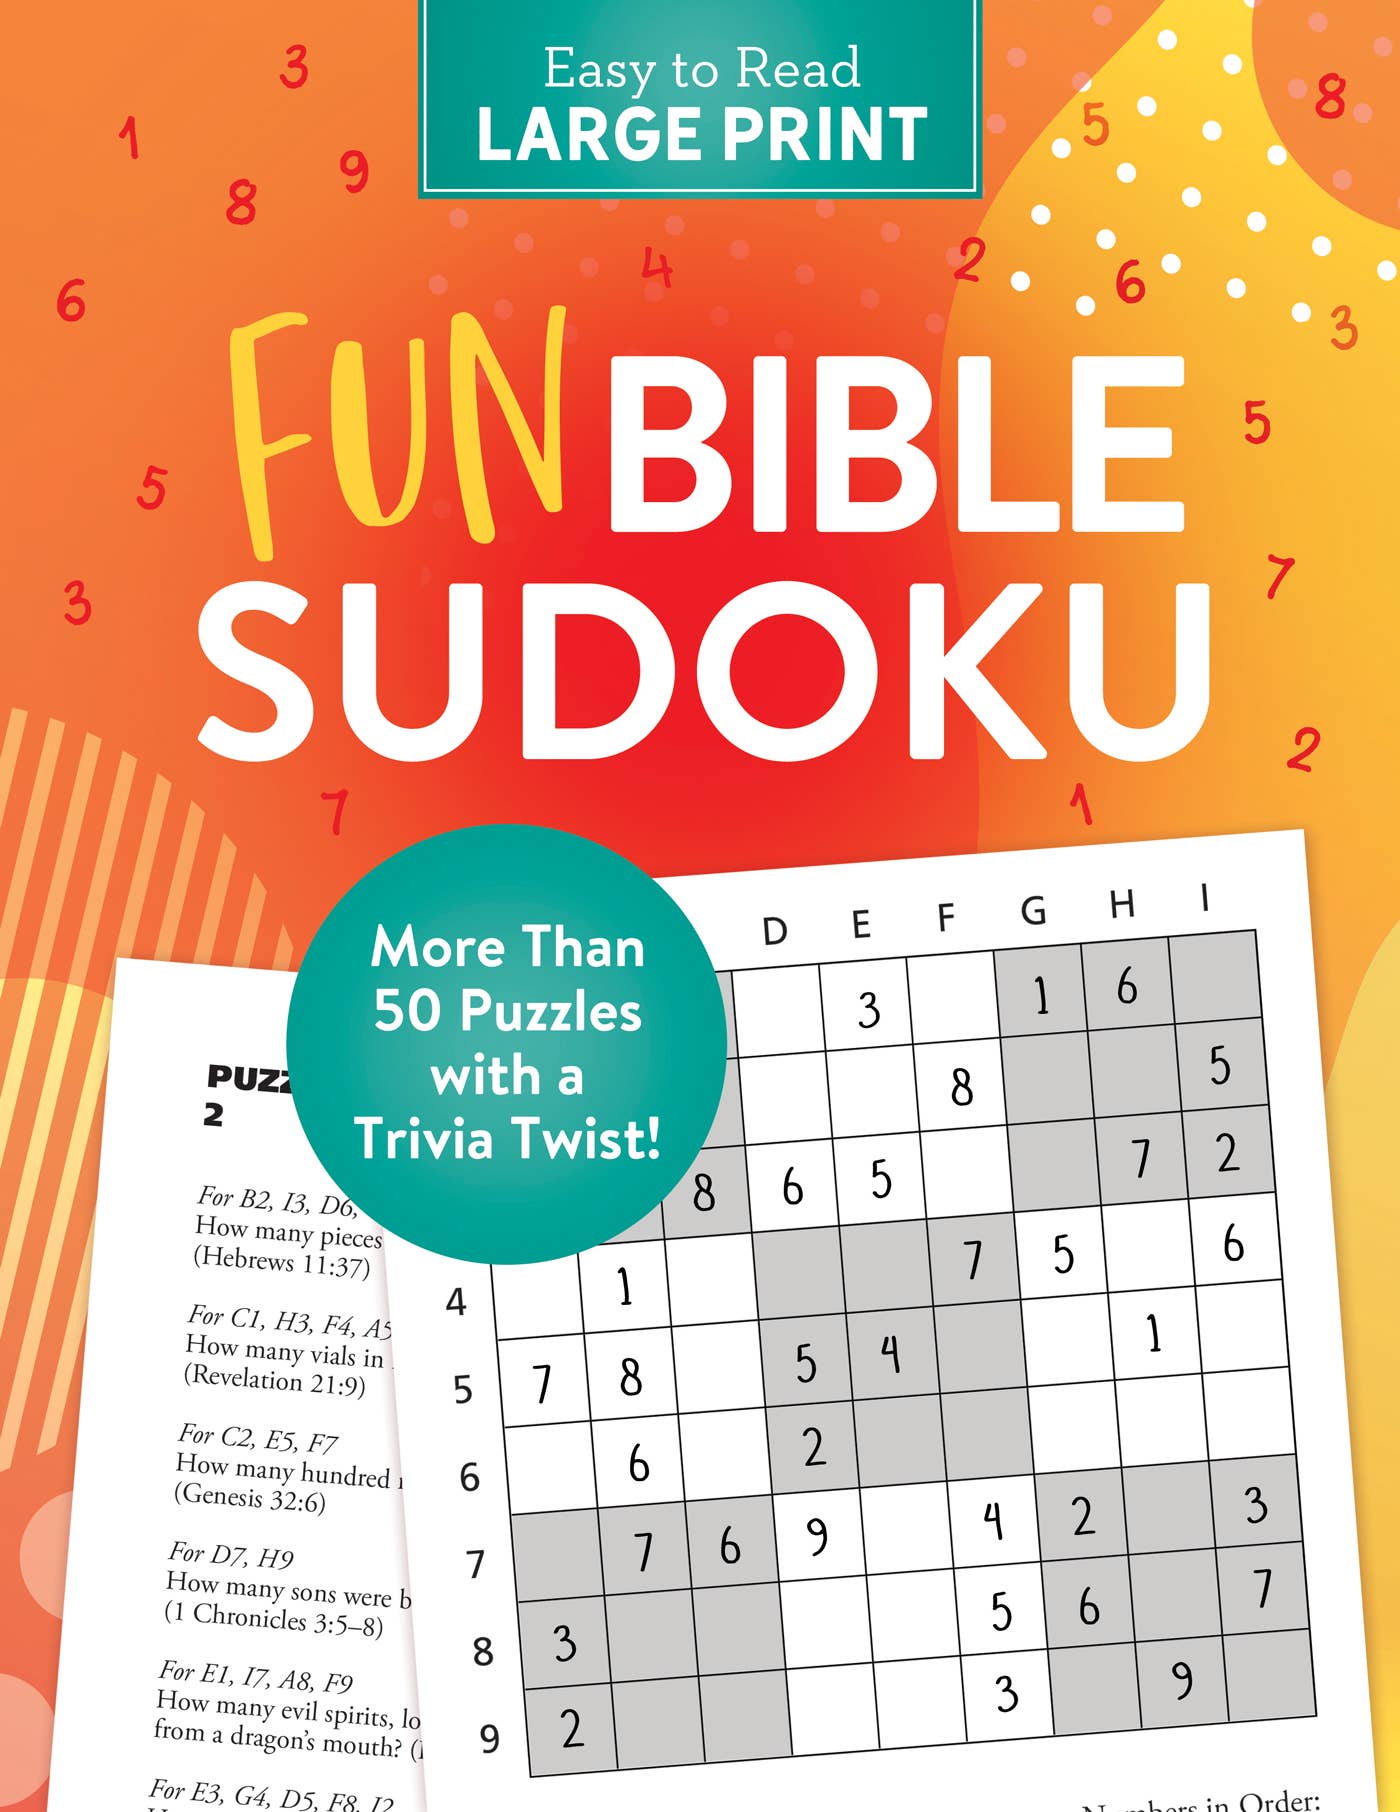 Fun Bible Sudoku Large Print